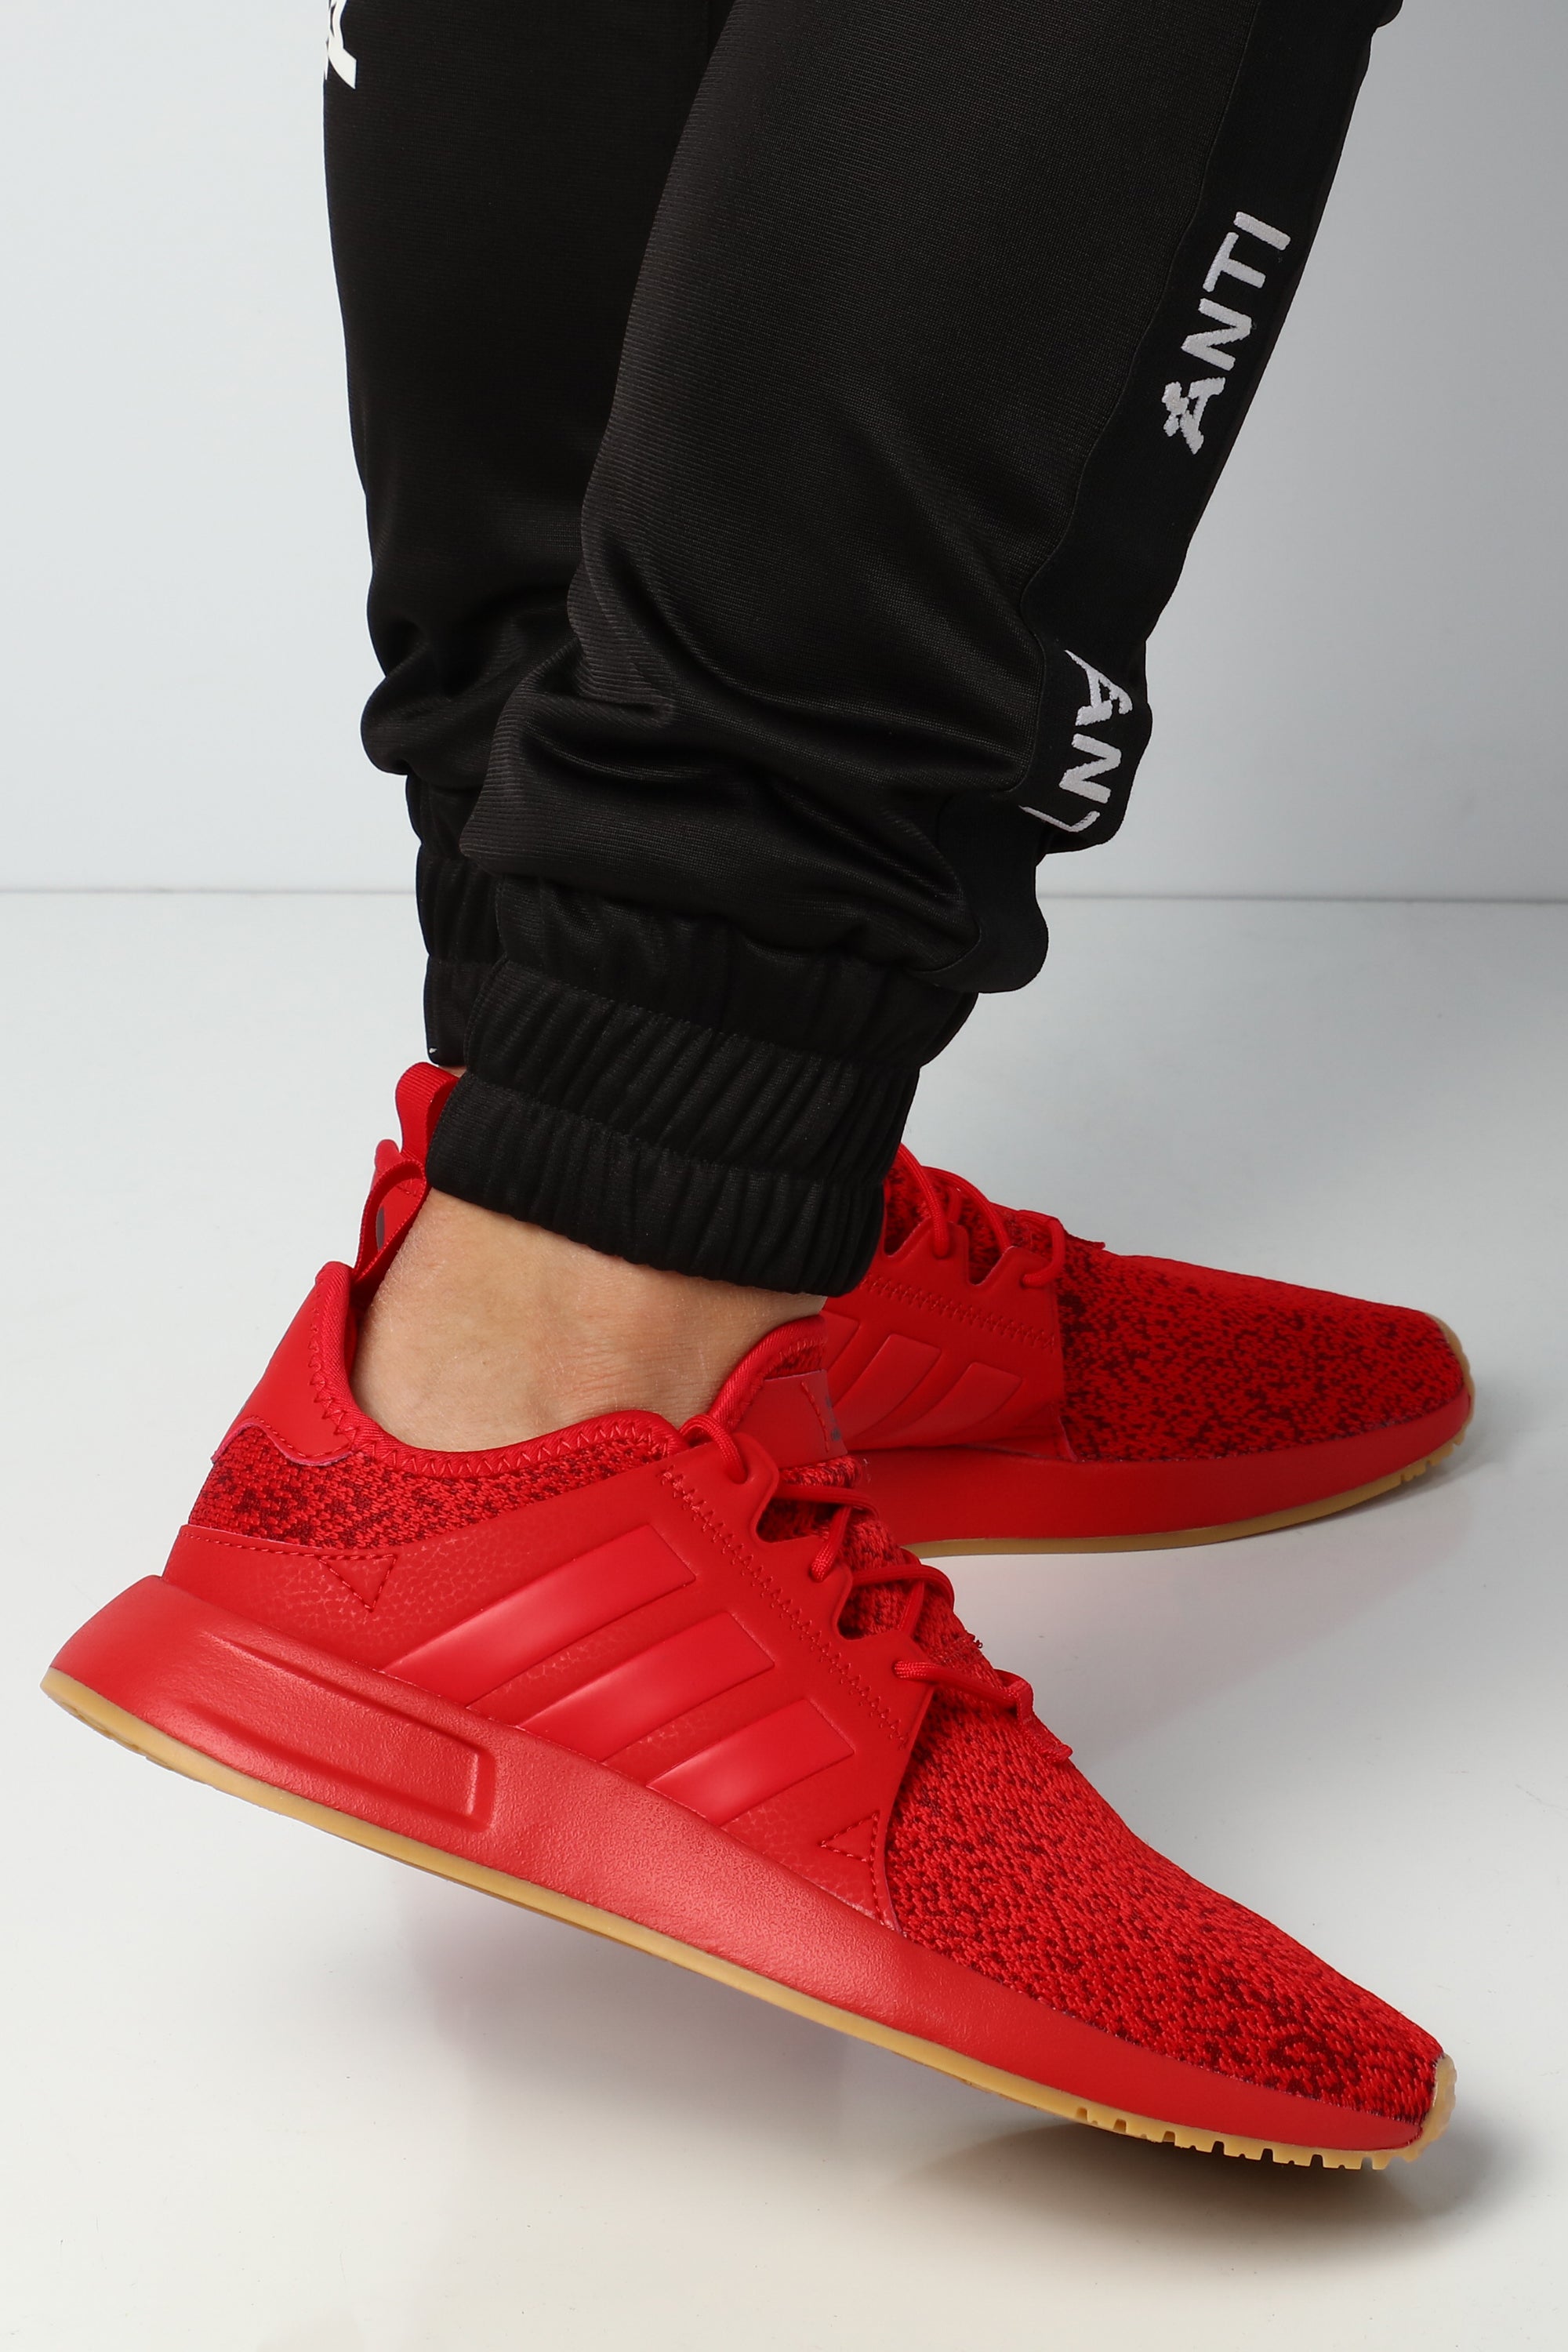 Adidas X_PLR Red/Gum | Culture Kings NZ